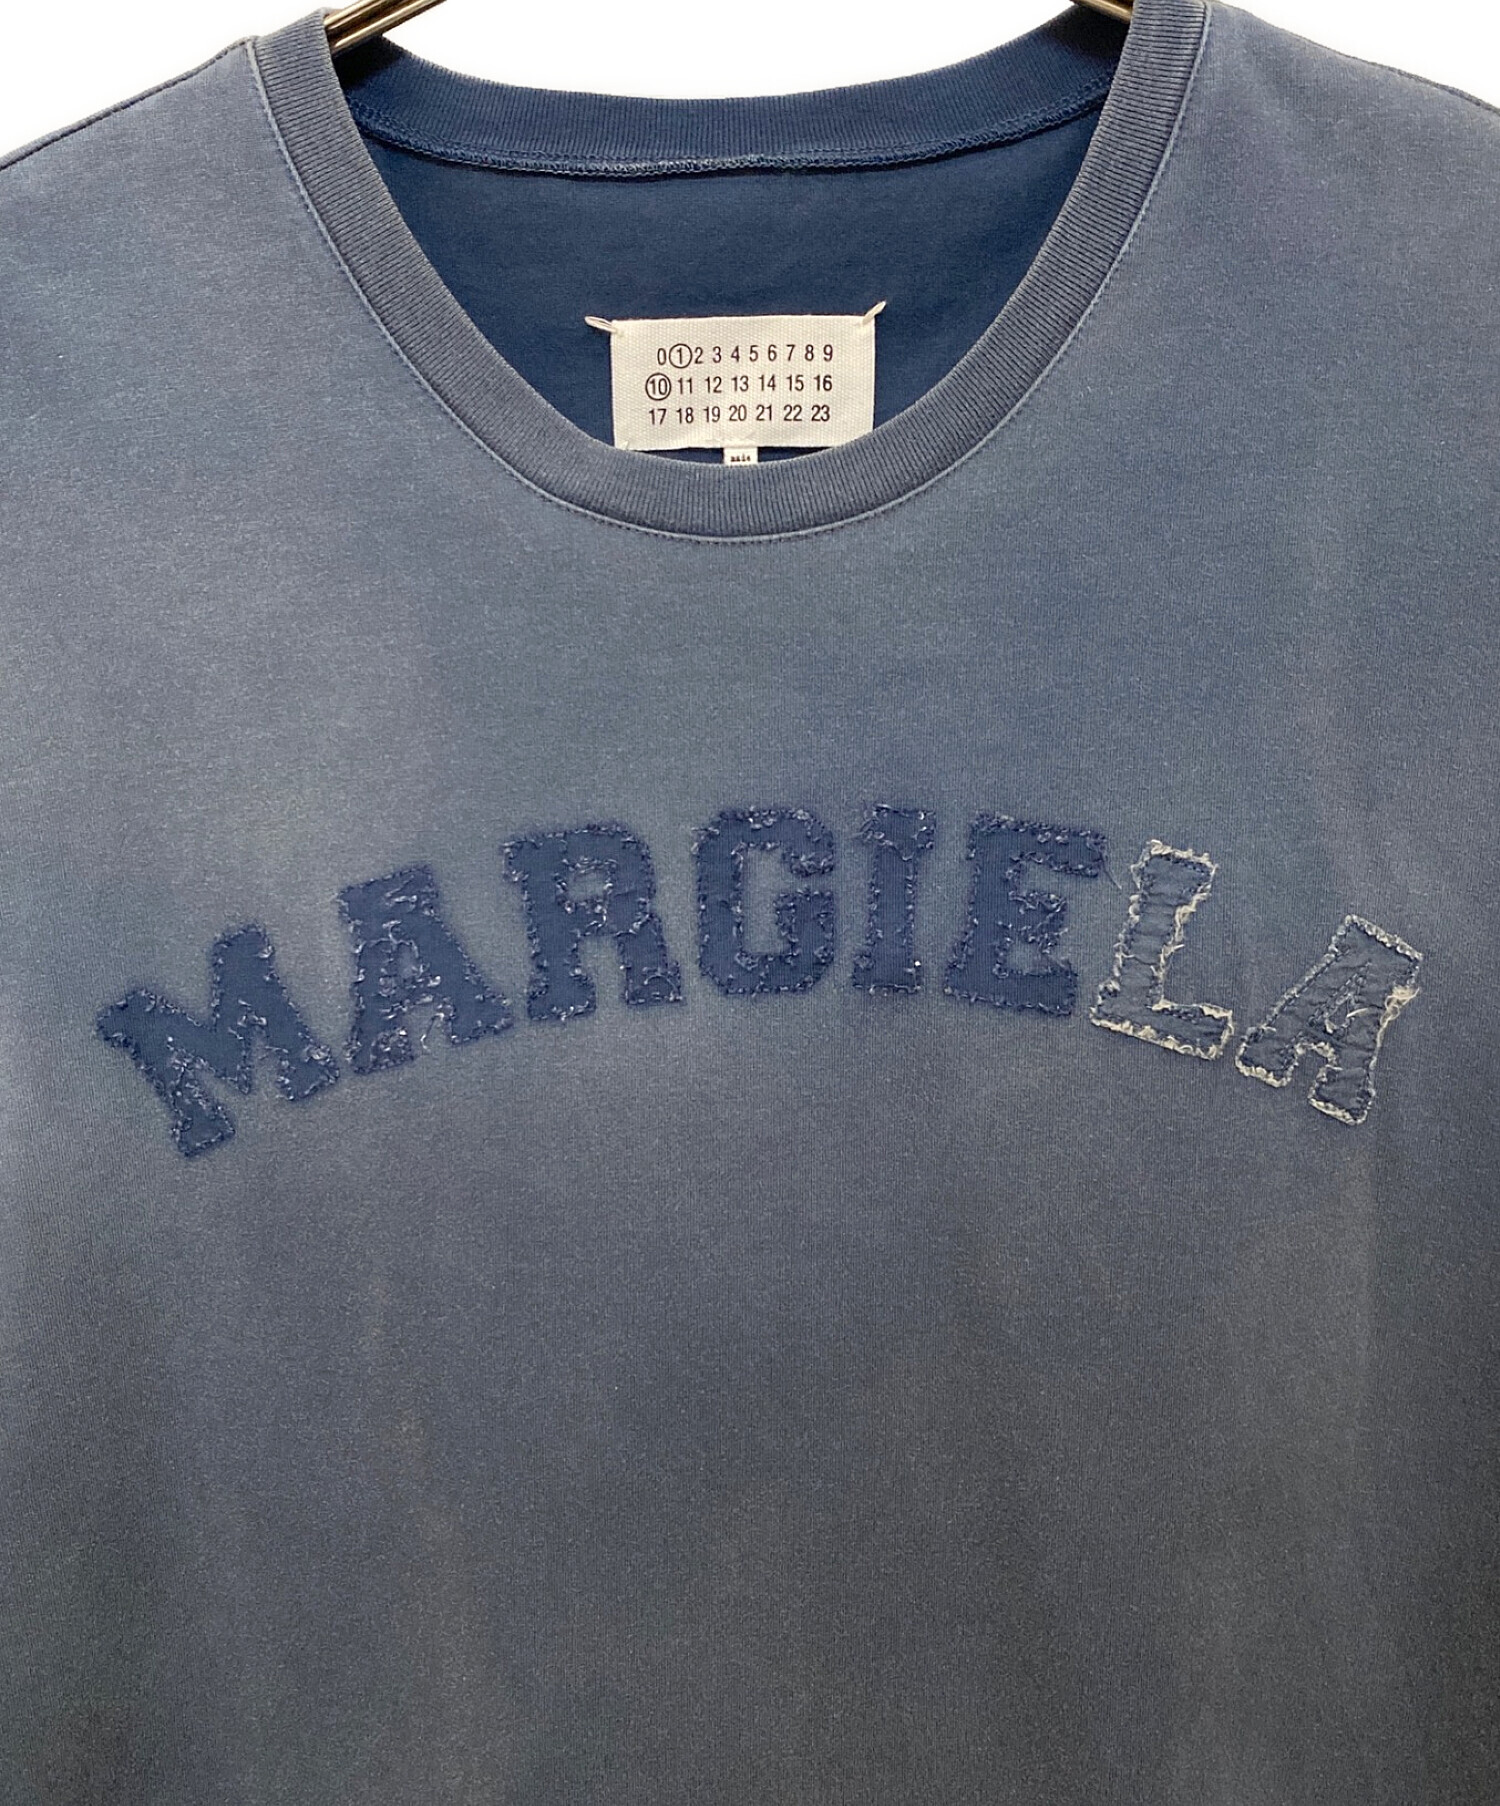 Maison Margiela (メゾン マルジェラ) 23SS オーバーサイズ オーバーダイ ロゴTシャツ ネイビー サイズ:XS